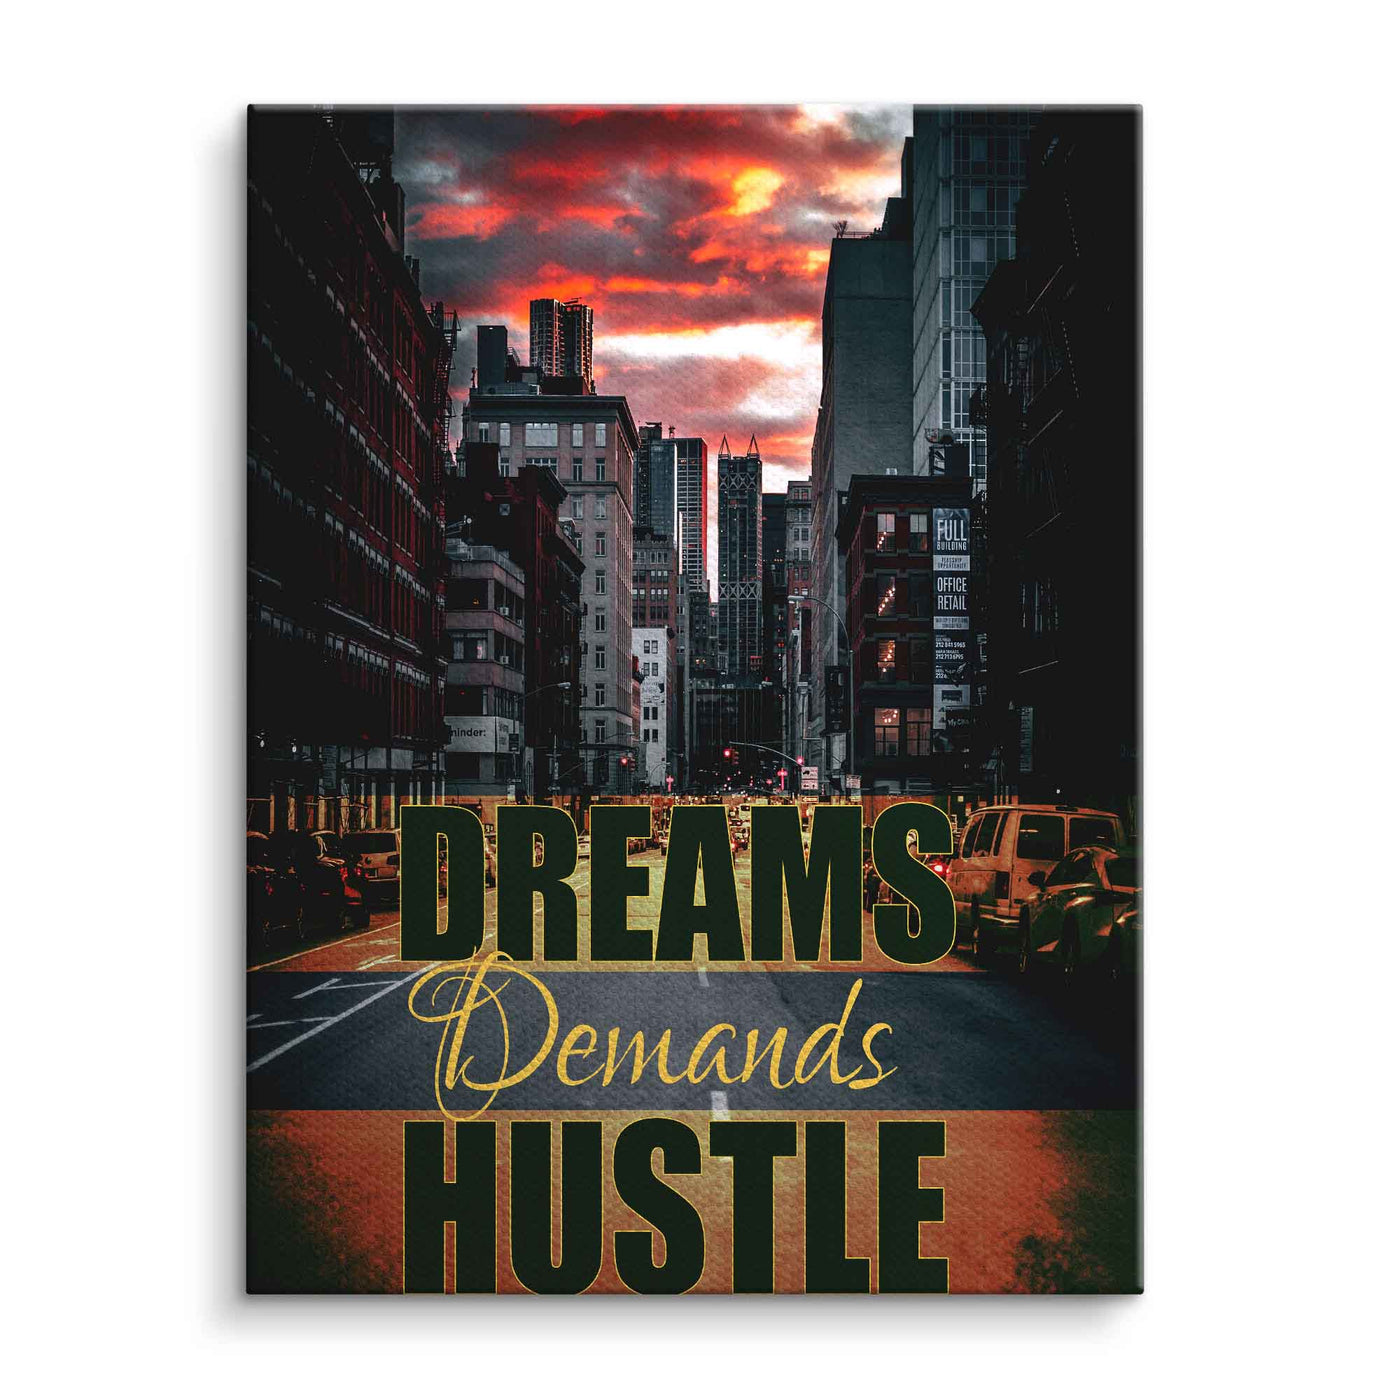 Dreams - Hustle